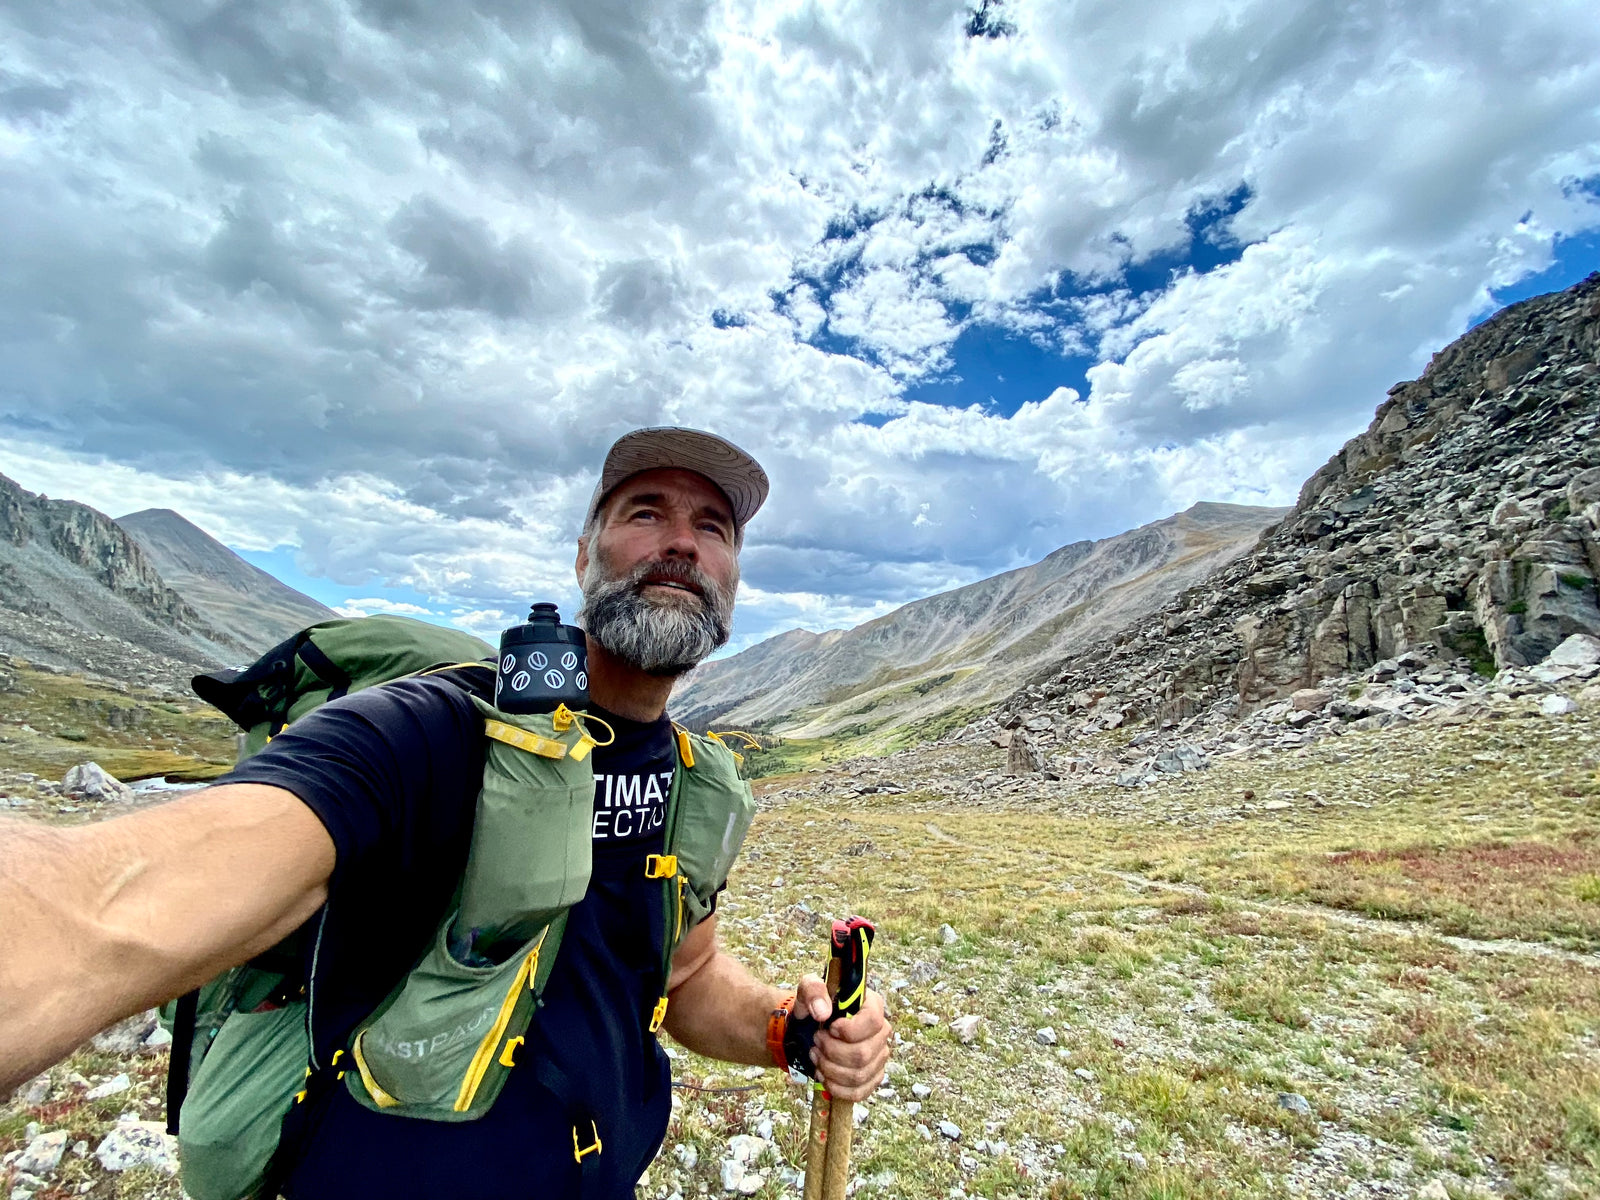 Chasing FKTs on the Colorado Trail by Matt Graham